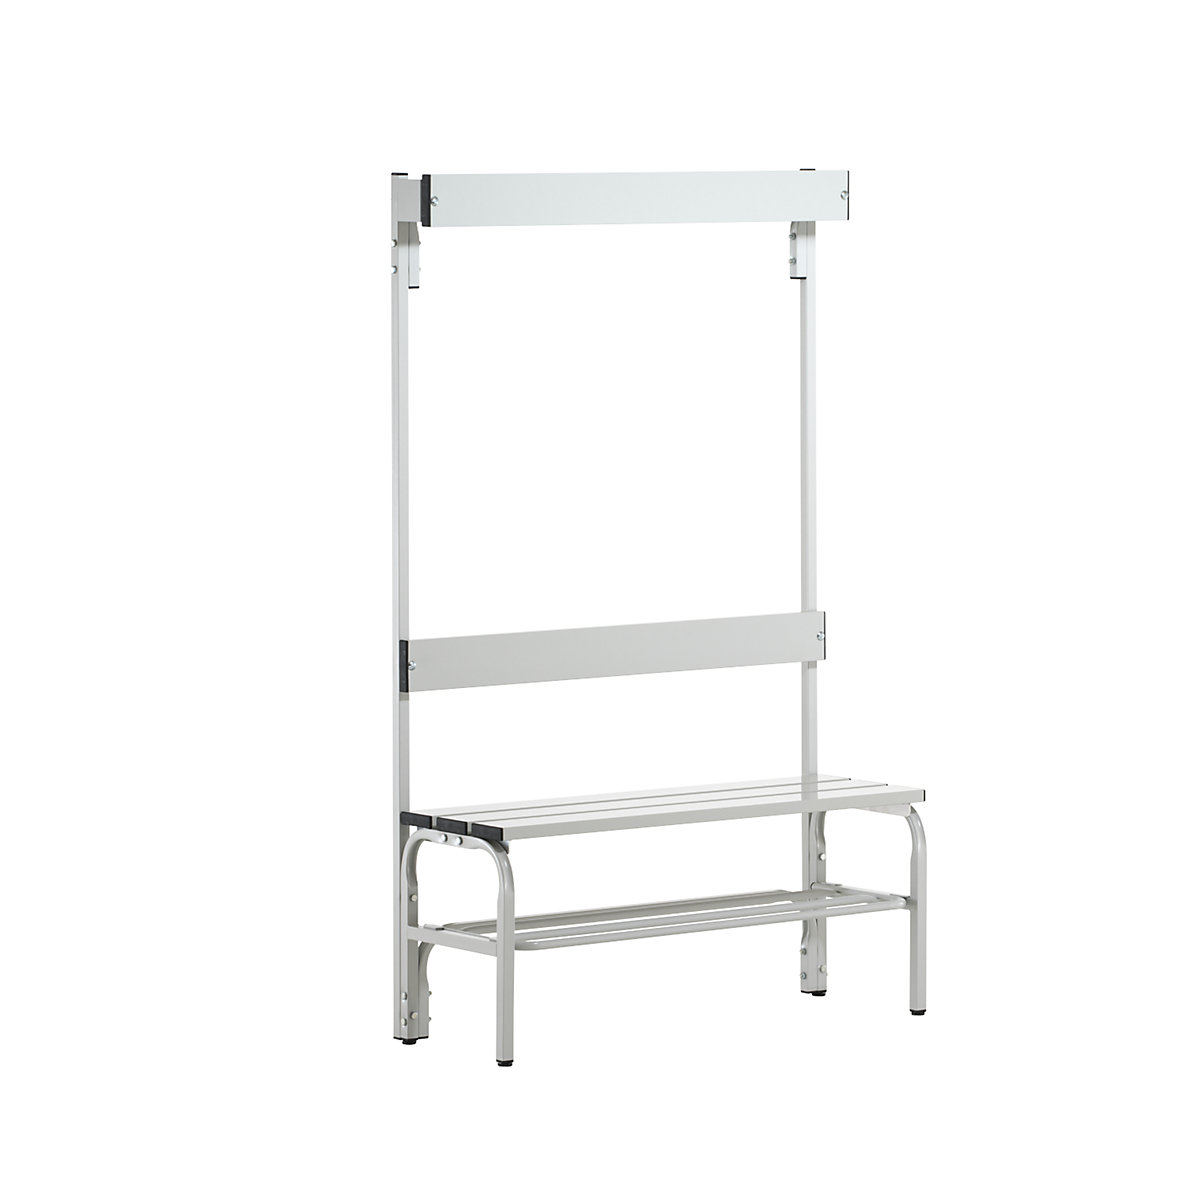 Sypro – Changing room bench with aluminium slats, HxD 1650 x 375 mm, single sided, length 1015 mm, 3 hooks, light grey, shoe rack